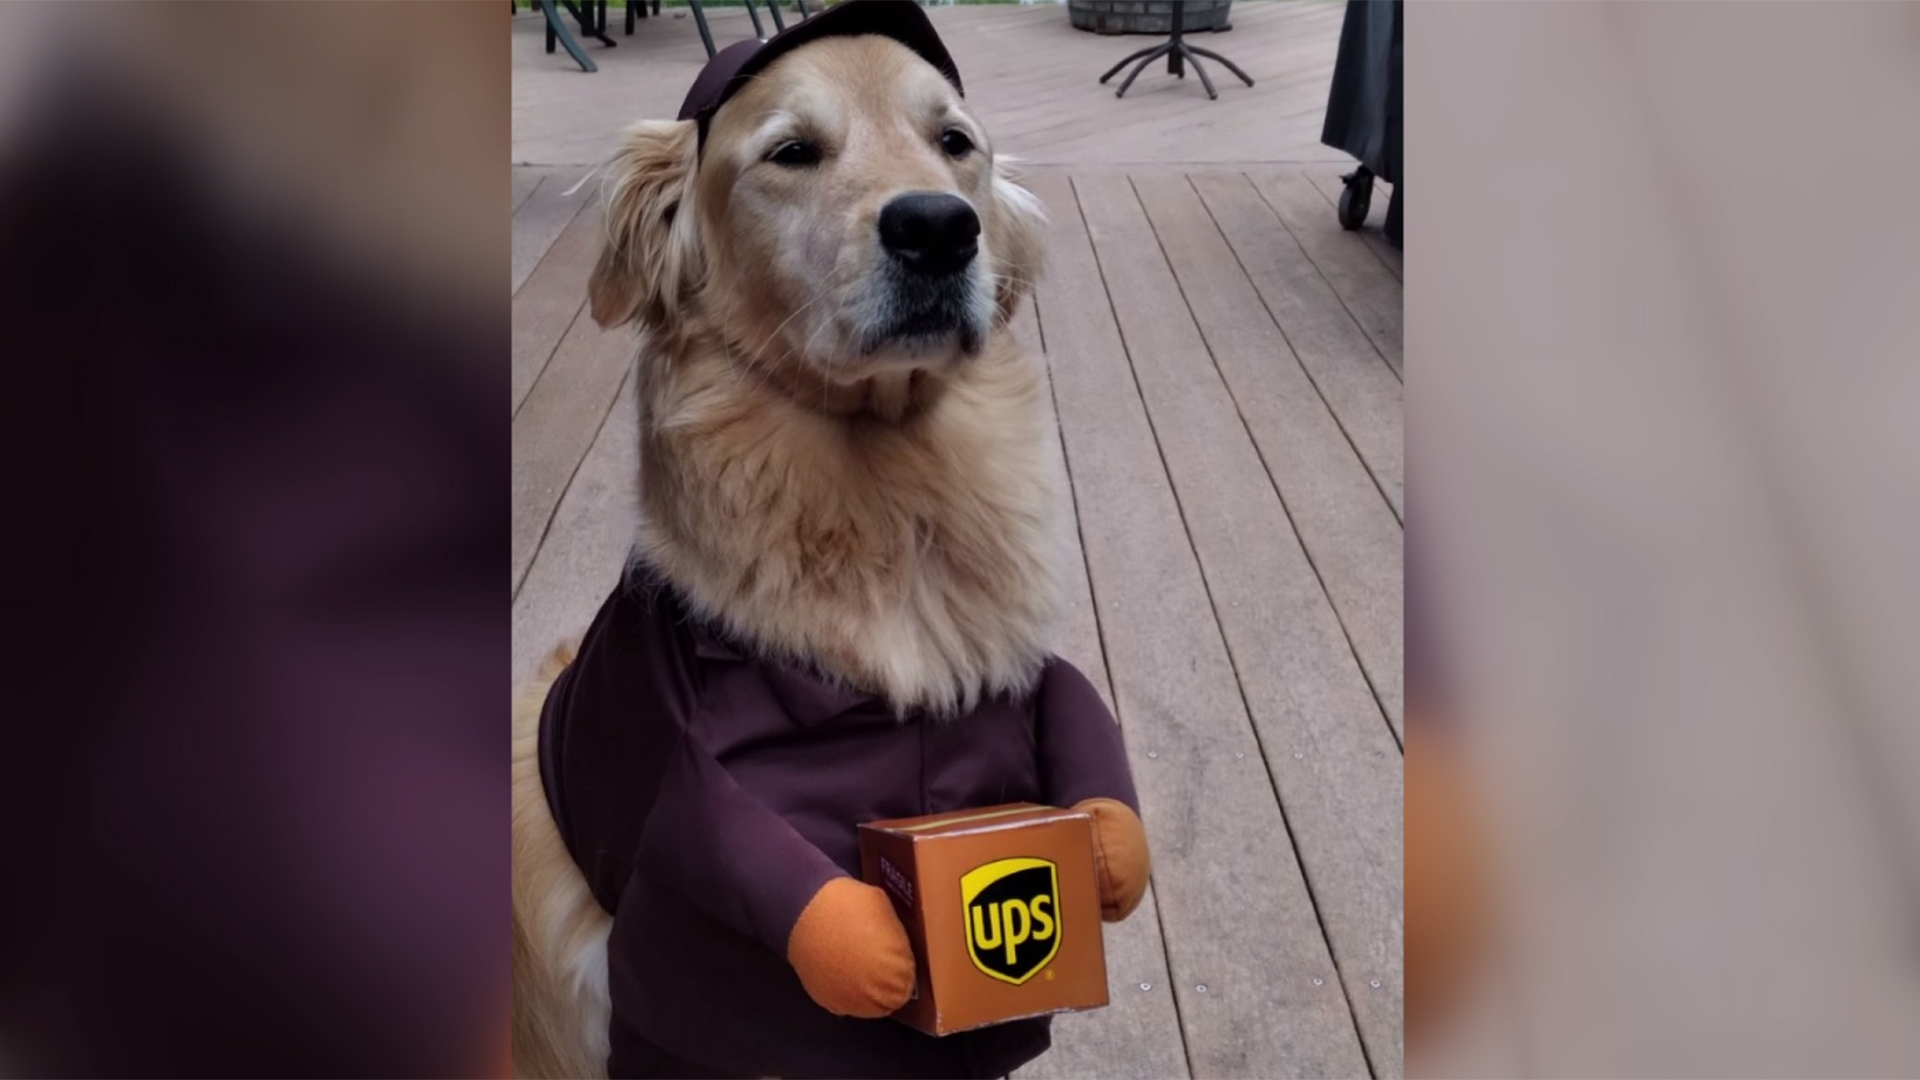 UPS Driver Dog Costume